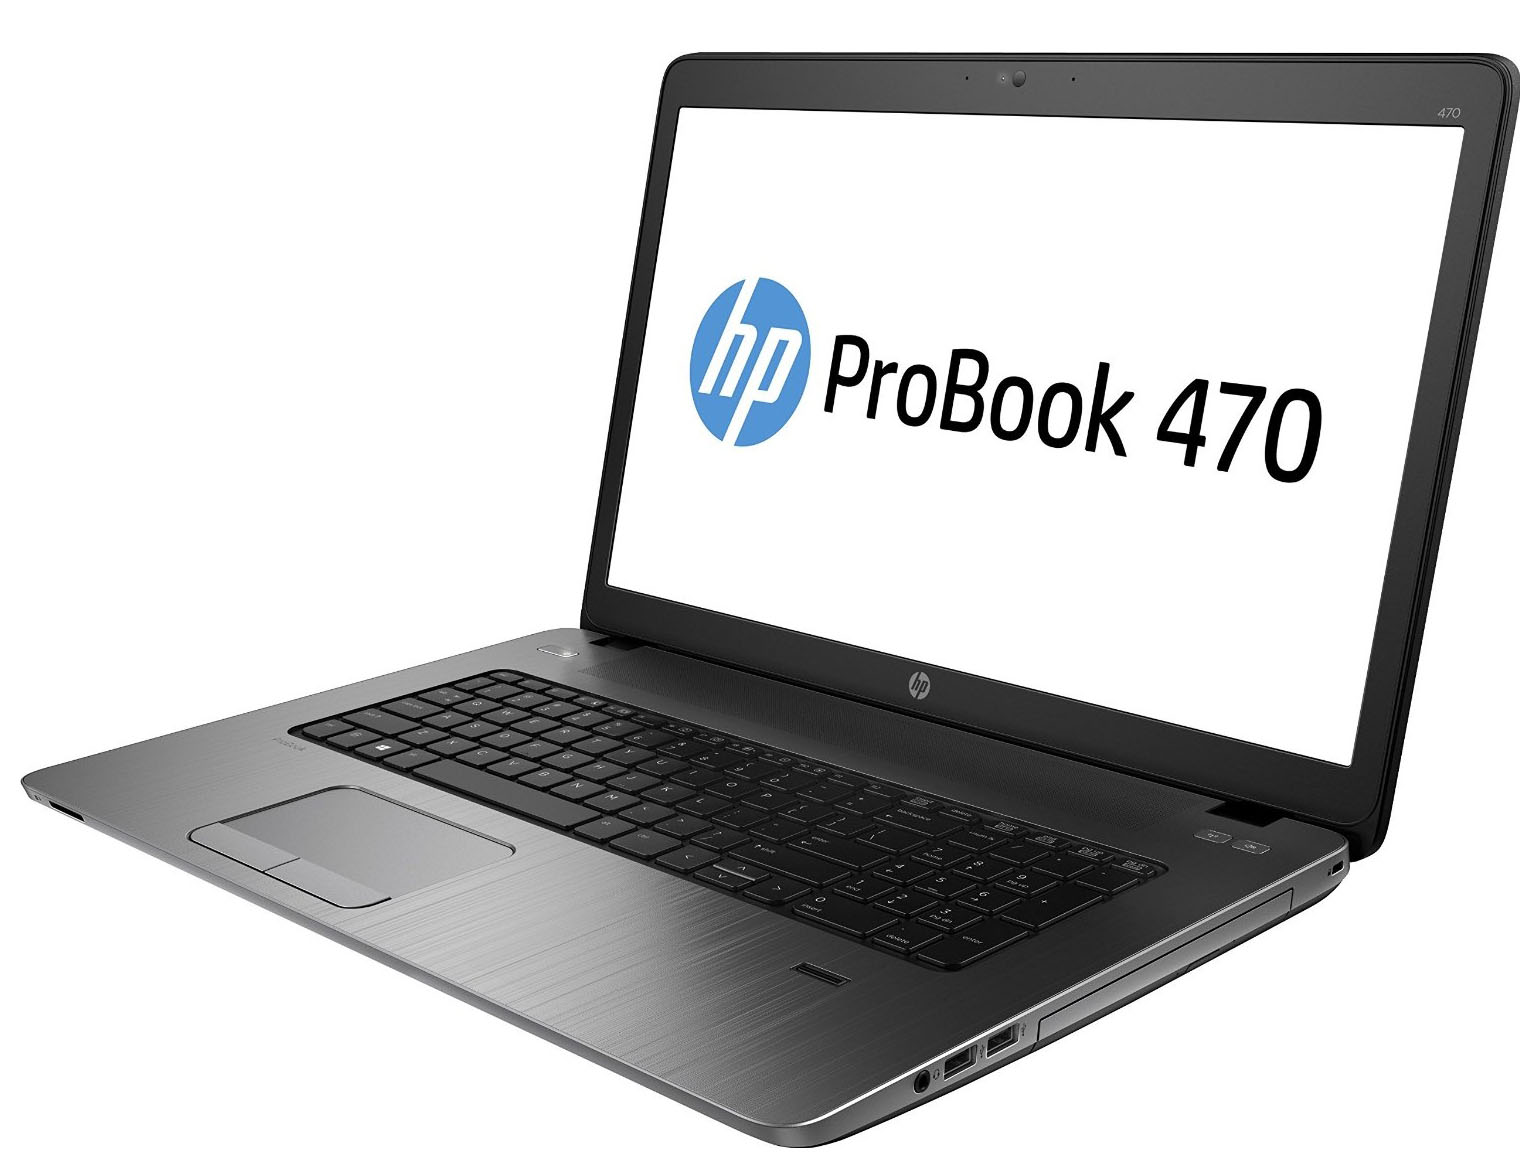 HP ProBook 470 G2 - Specs, Tests, and Prices | LaptopMedia.com